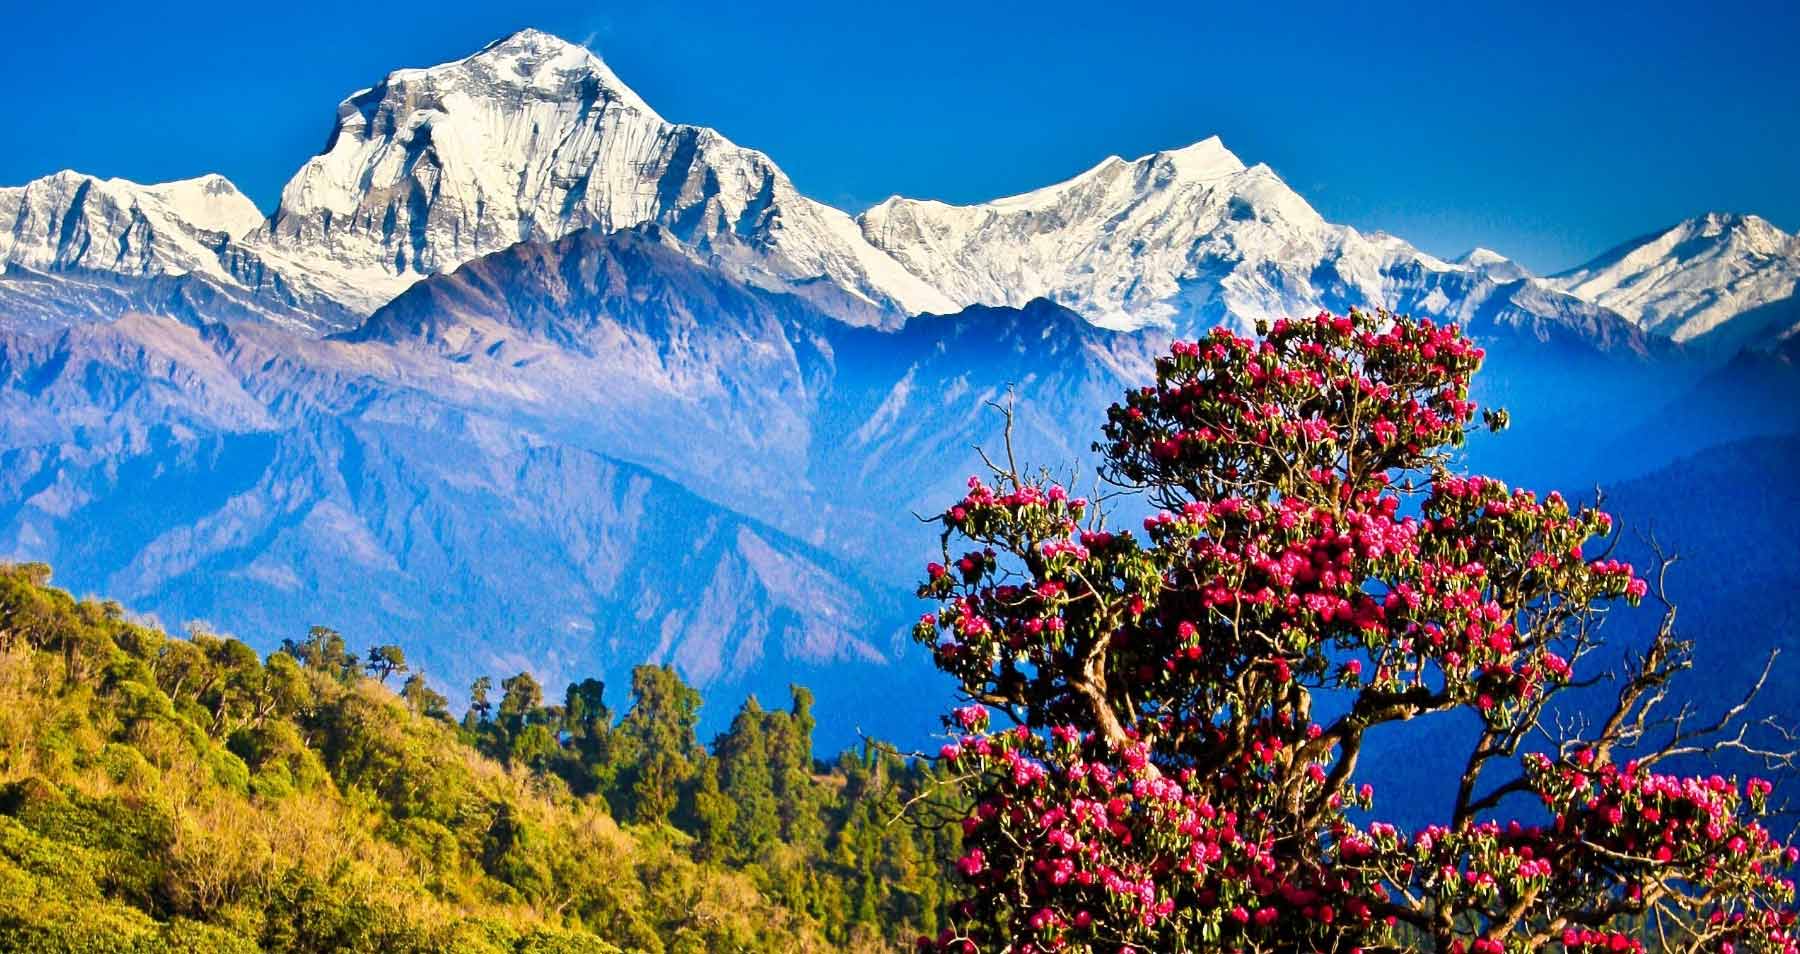 Dhulikhel Tours And Travel Information Nepal Asia Tours 